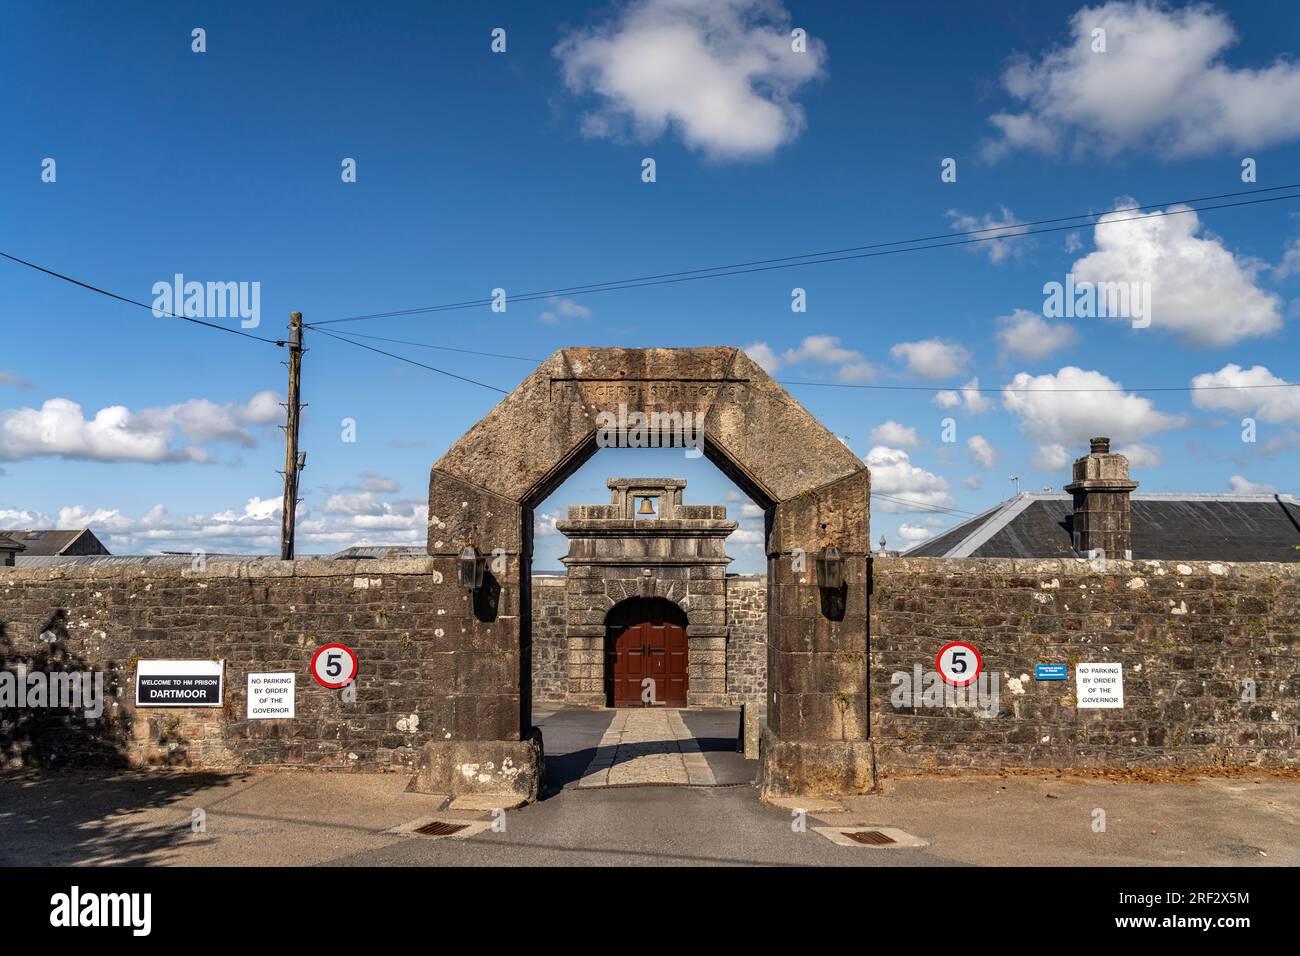 Das Gefängnis His Majesty’s Prison Dartmoor bei Princetown, Dartmoor, Devon, England, Großbritannien, Europa  |  His Majesty’s Prison Dartmoor in Prin Stock Photo